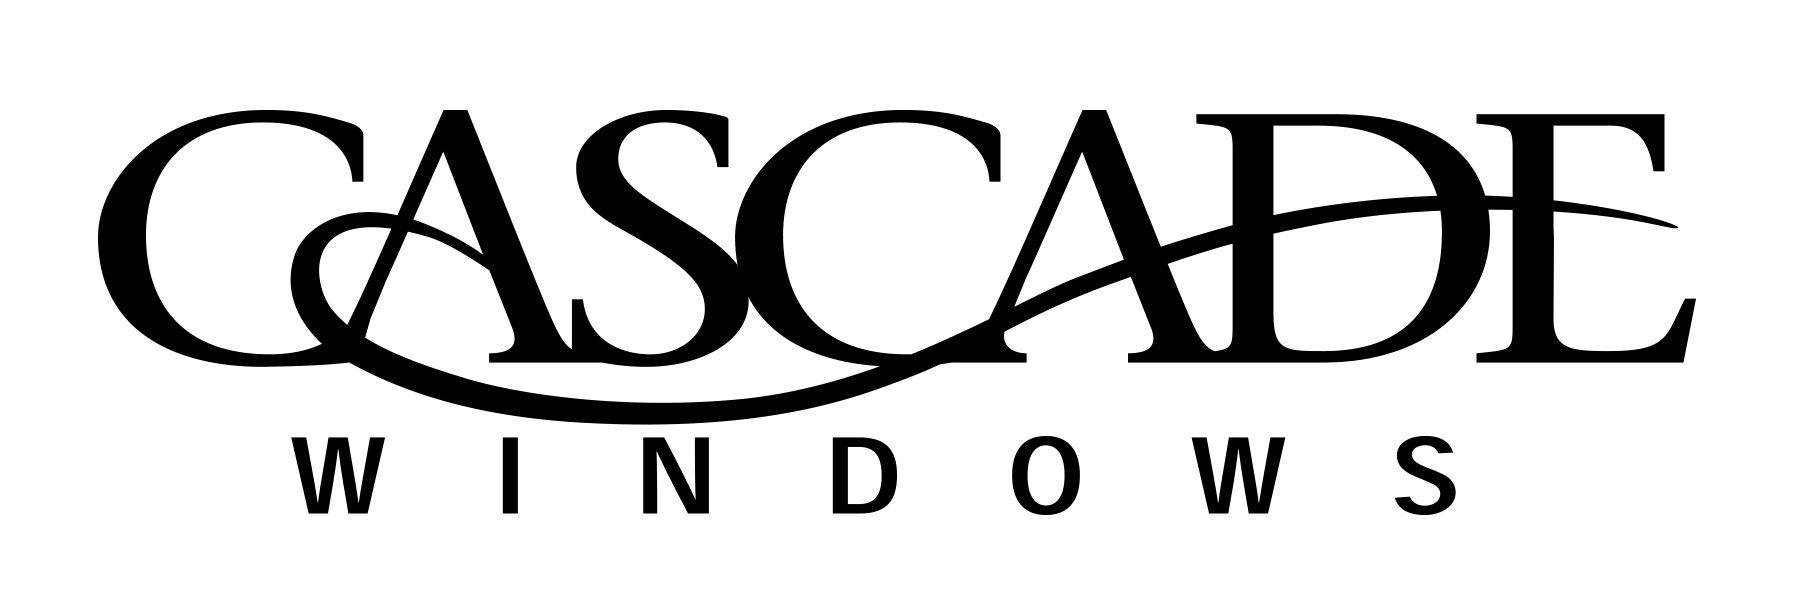 cascade window company logo